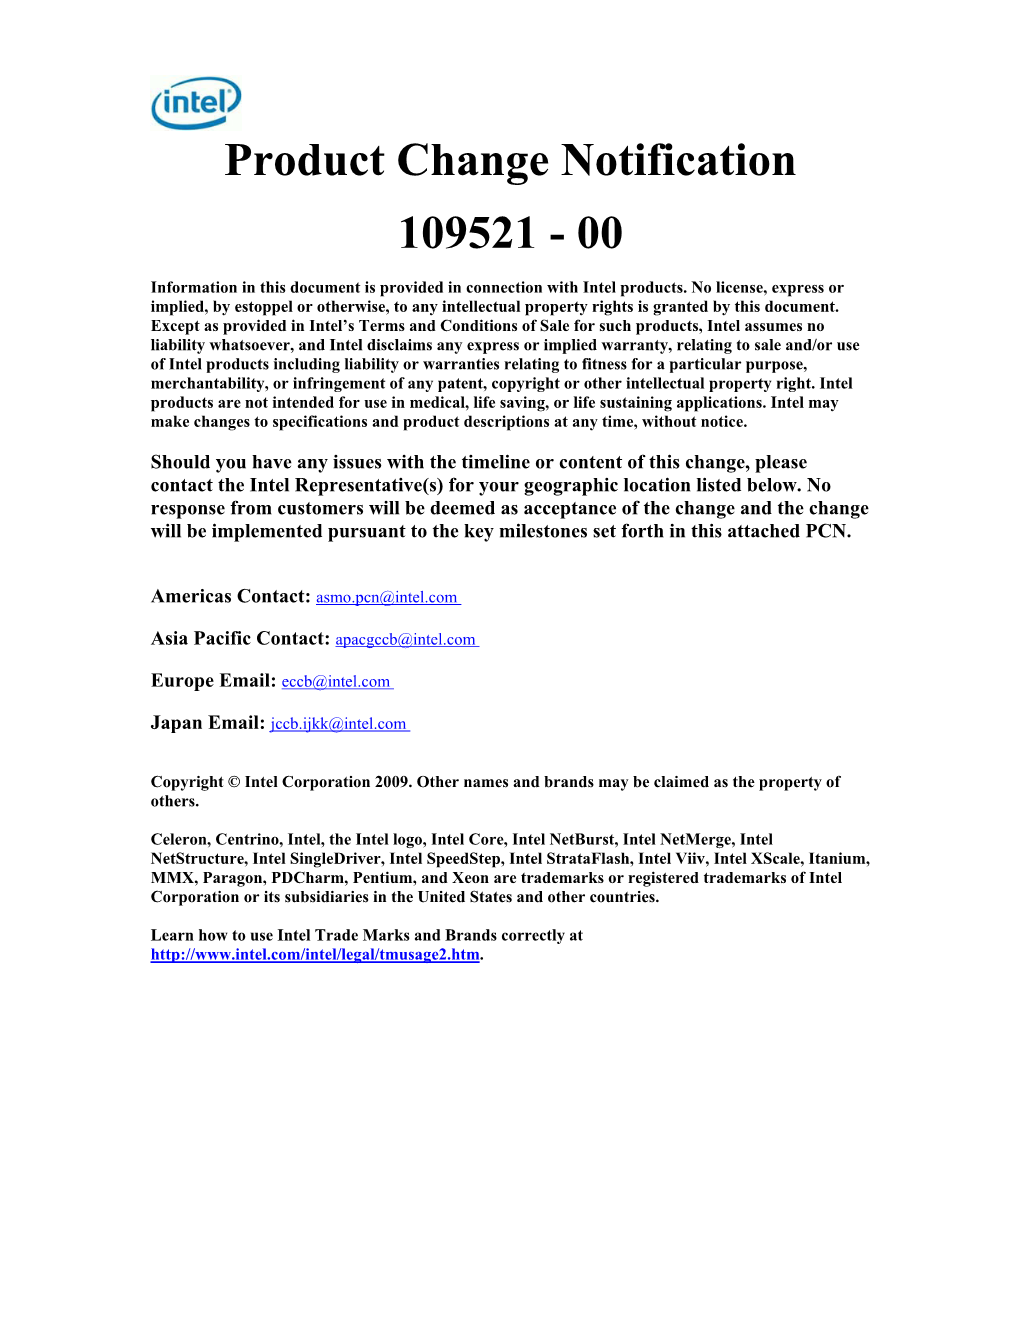 Product Change Notification 109521